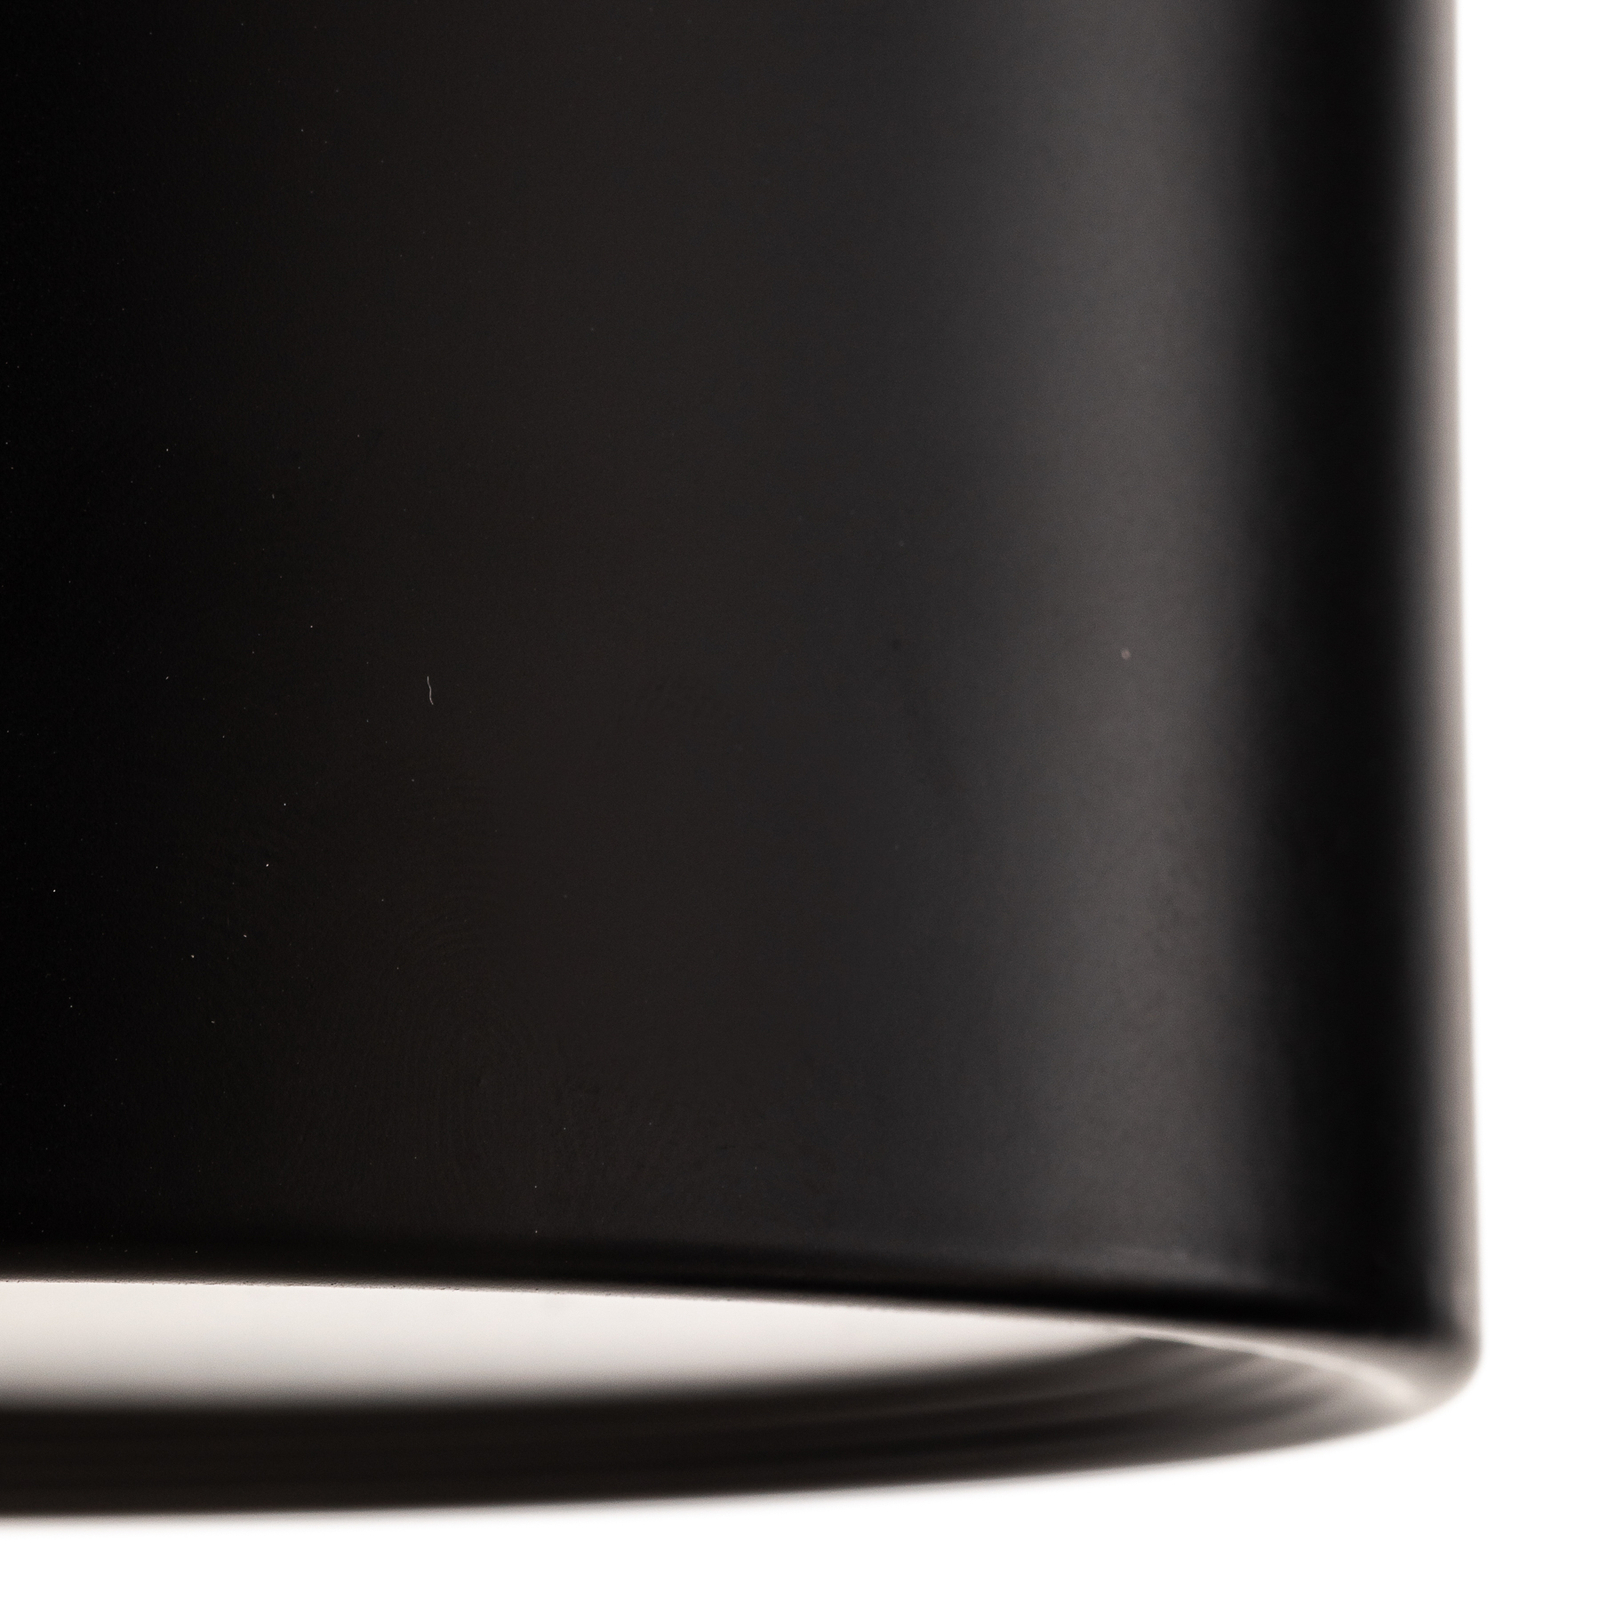 Ita LED downlight in zwart met diffuser, Ø 10 cm